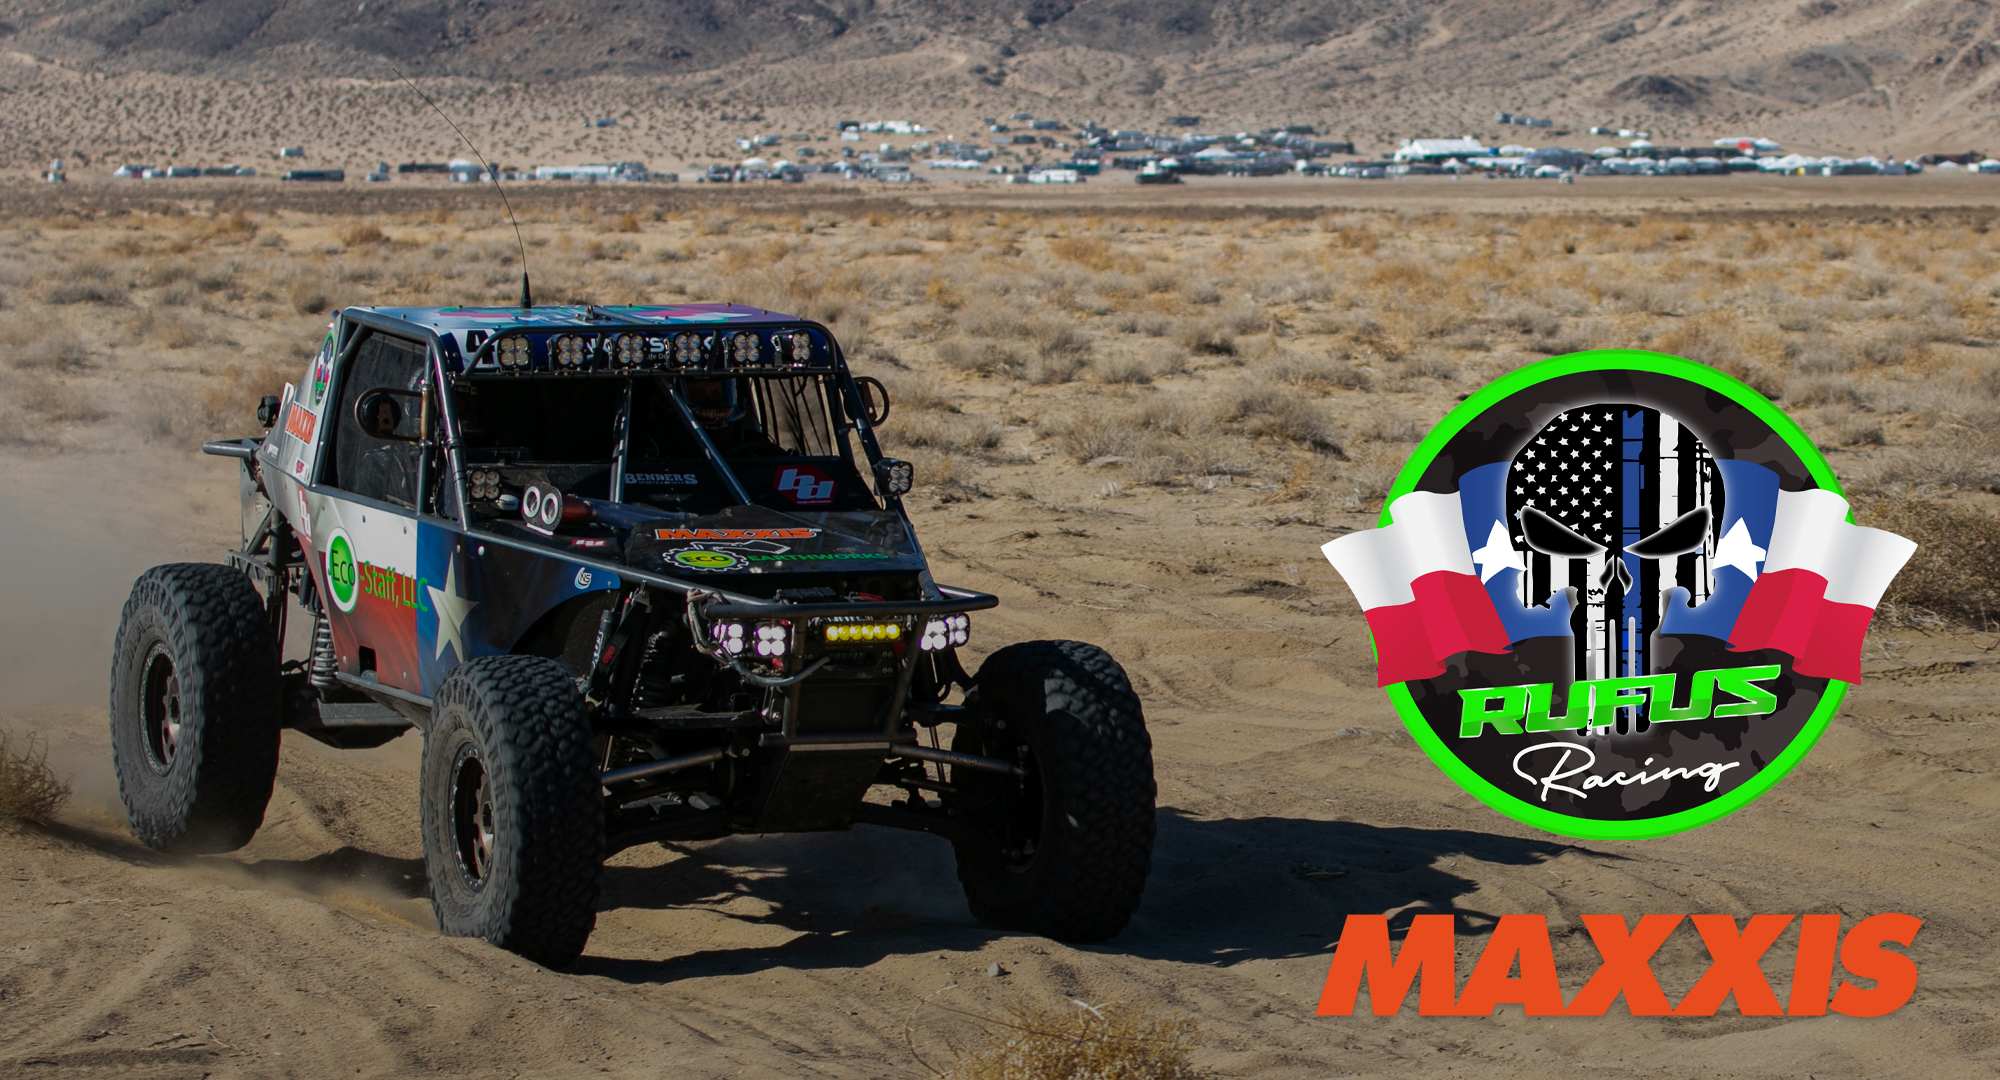 UTV racing through the desert with Maxxis and Rufus Racing logos